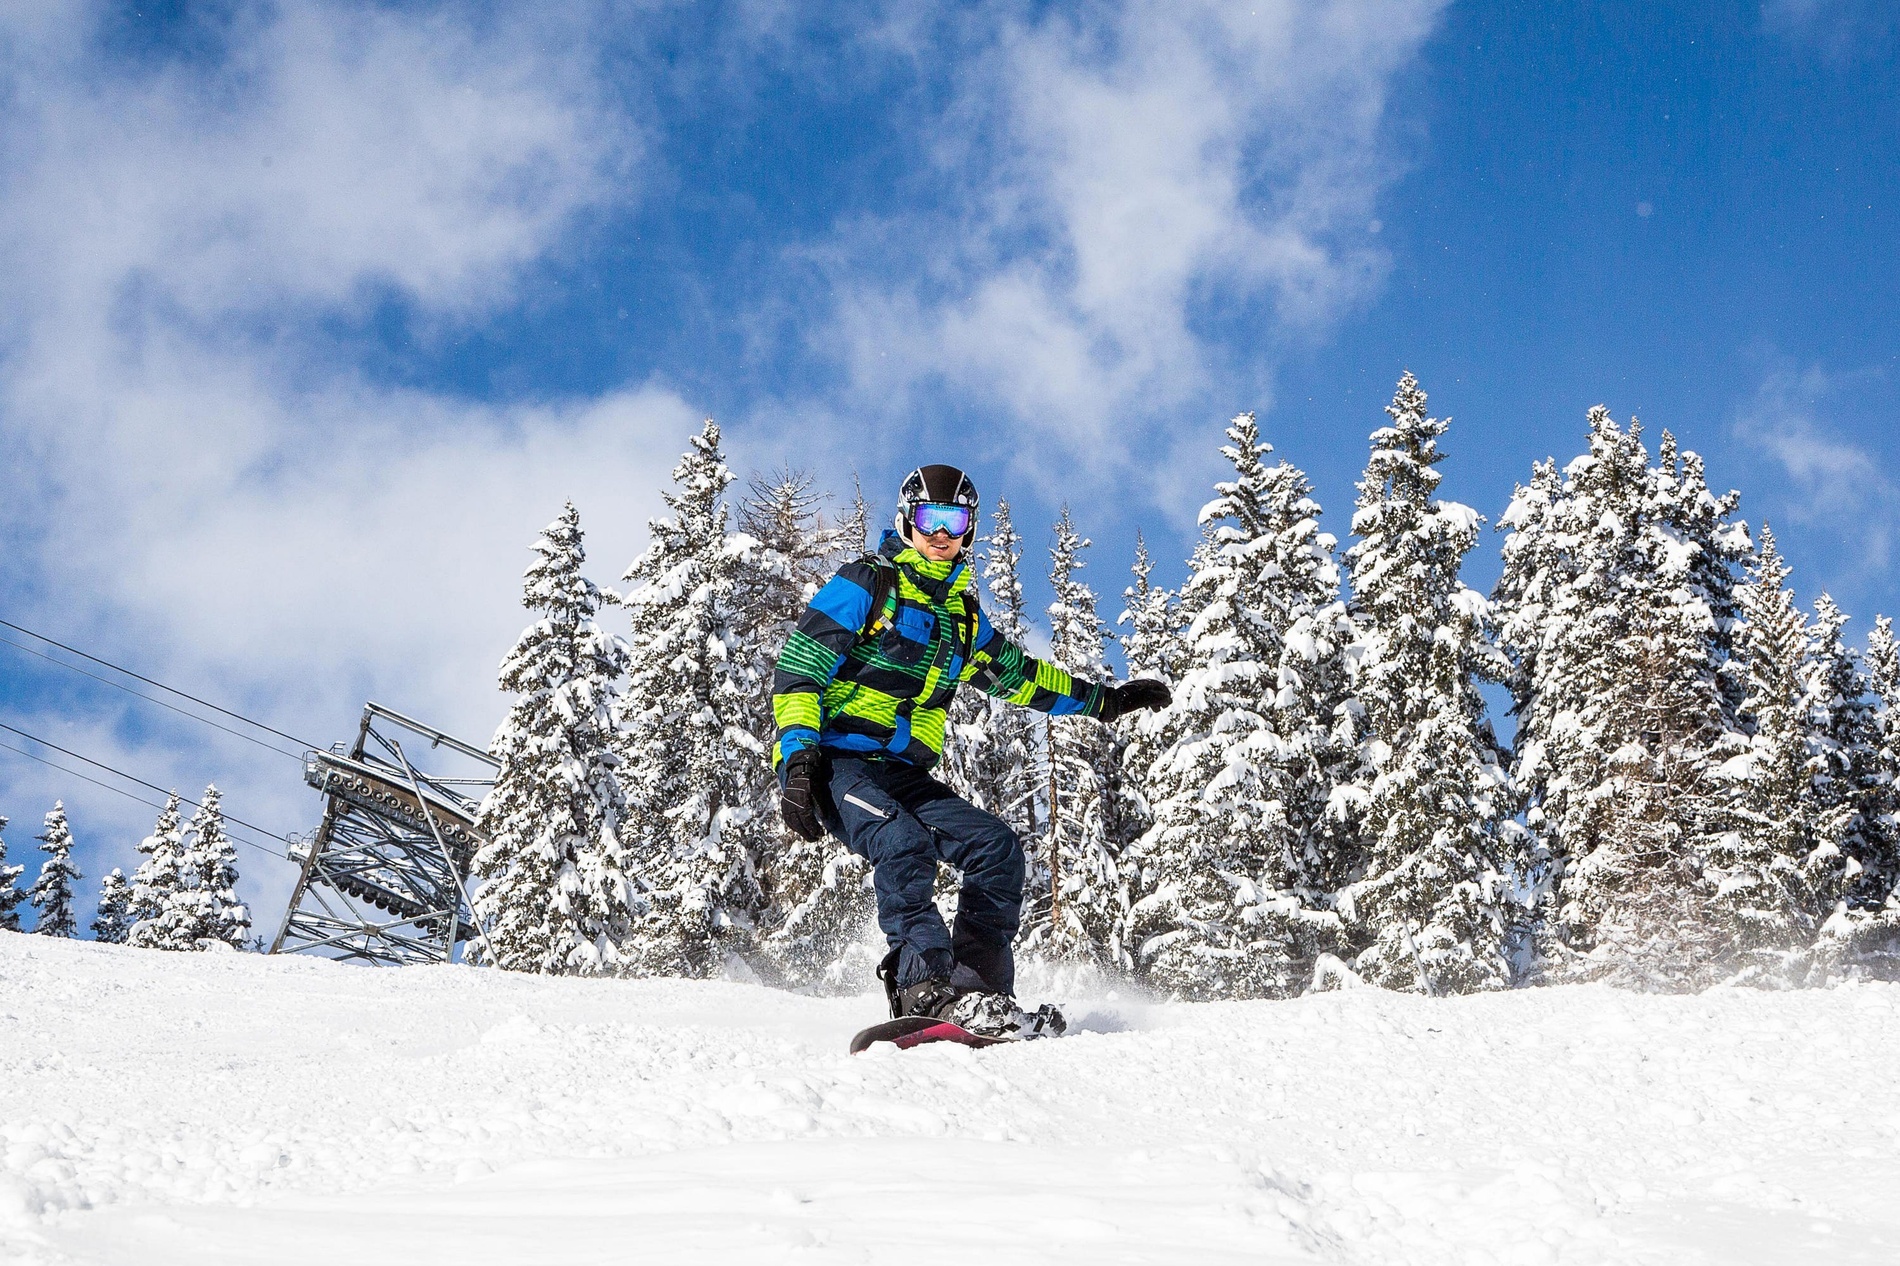 a person riding a snowboard down a snowy hill